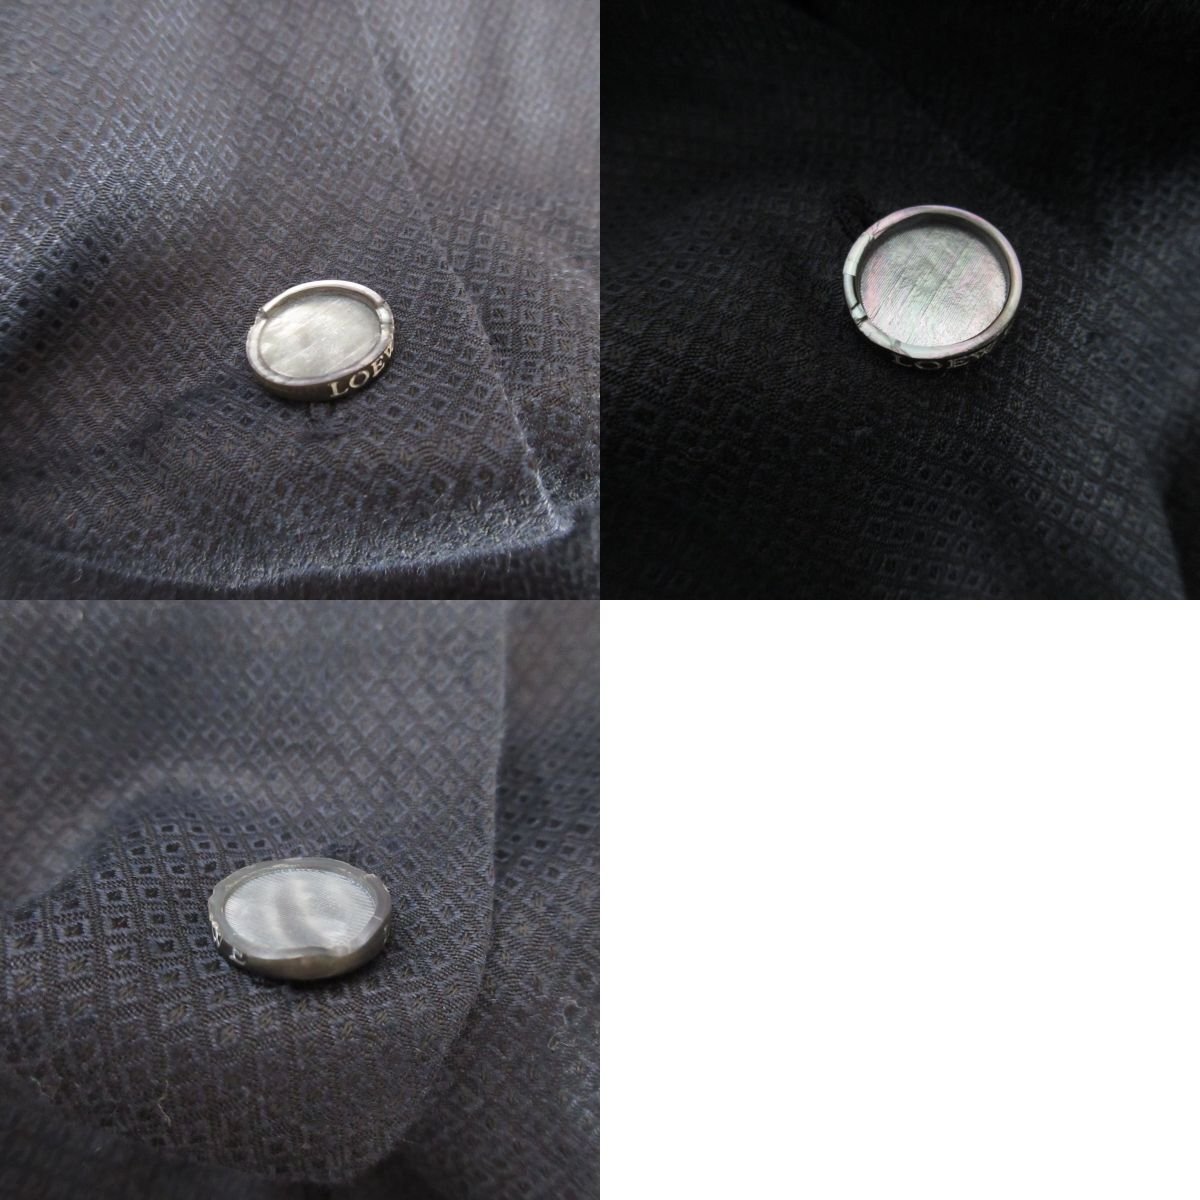  почти прекрасный товар LOEWE Loewe linen Blend пуховка рукав рубашка с коротким рукавом блуза размер 40 темно-синий 